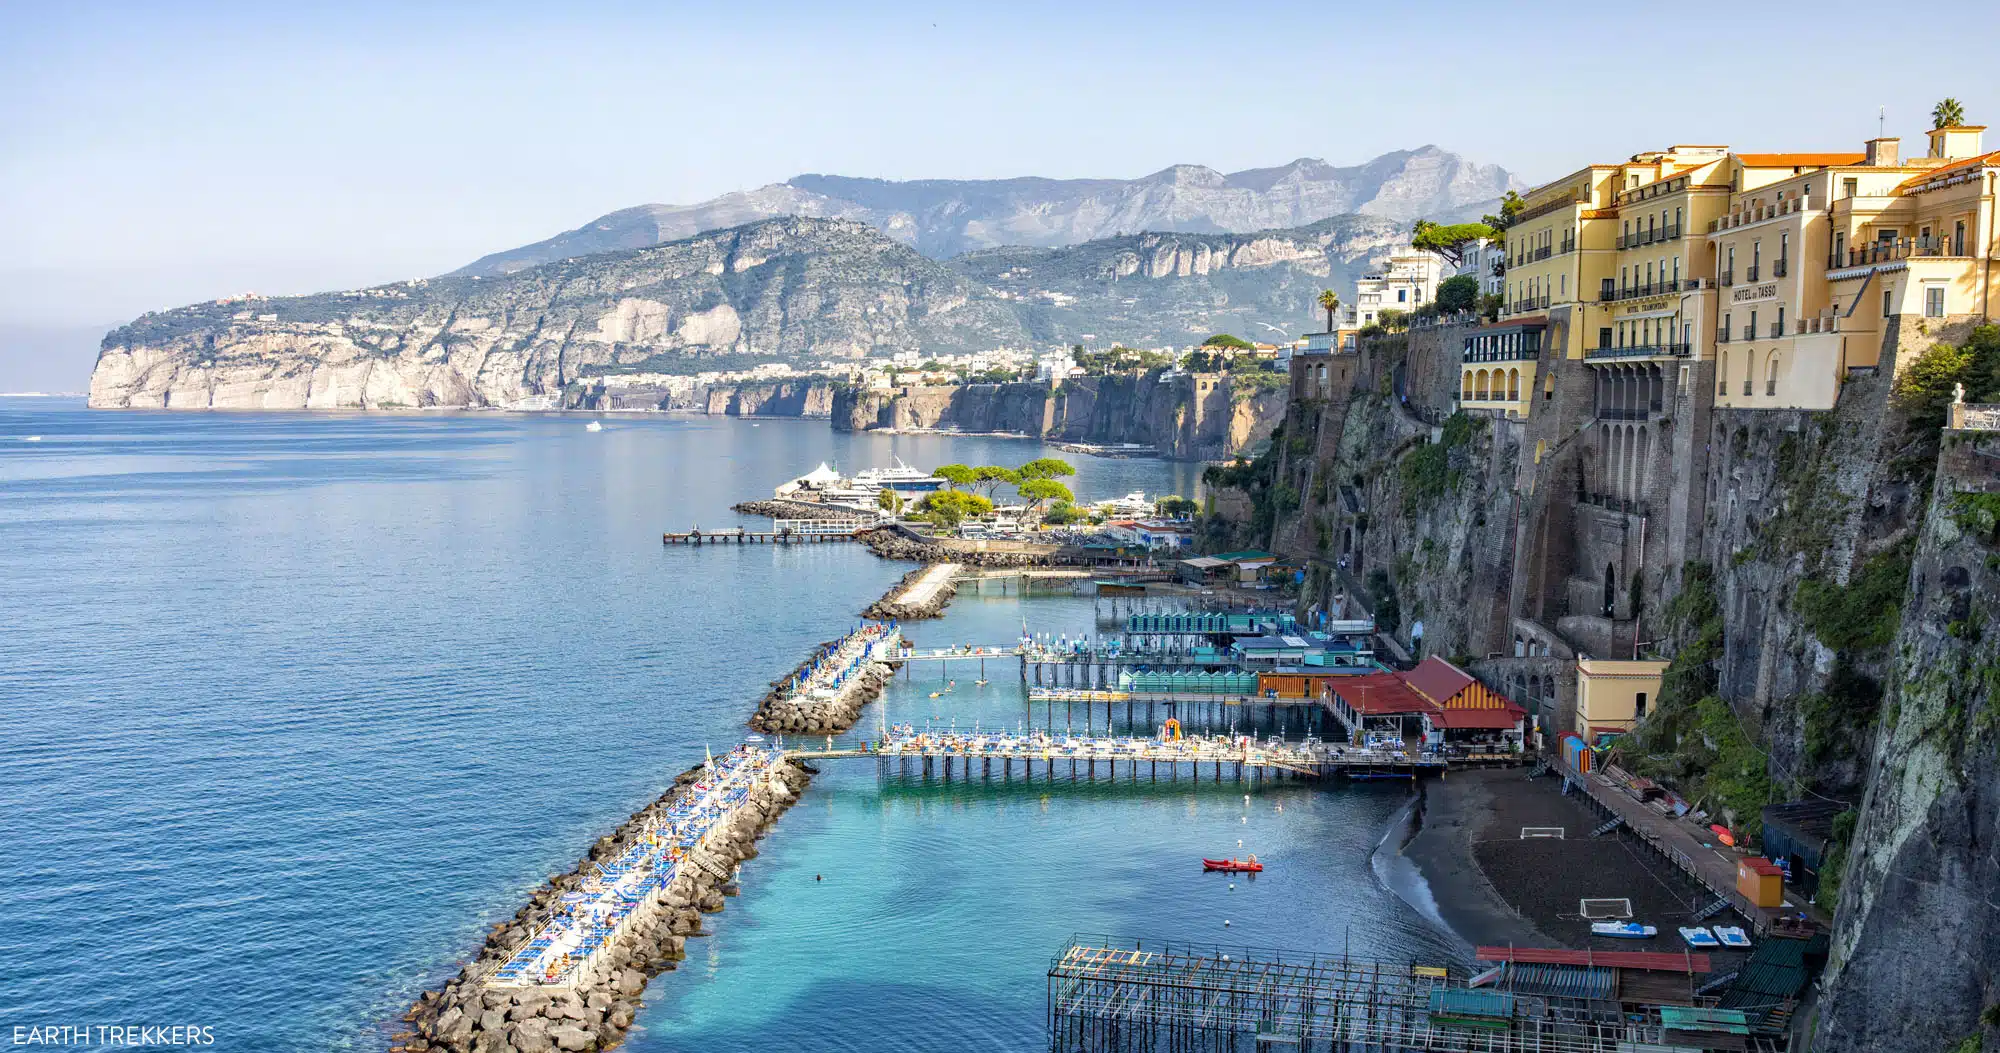 Featured image for “Three Days in Sorrento, Italy | Sorrento, Capri & the Amalfi Coast”